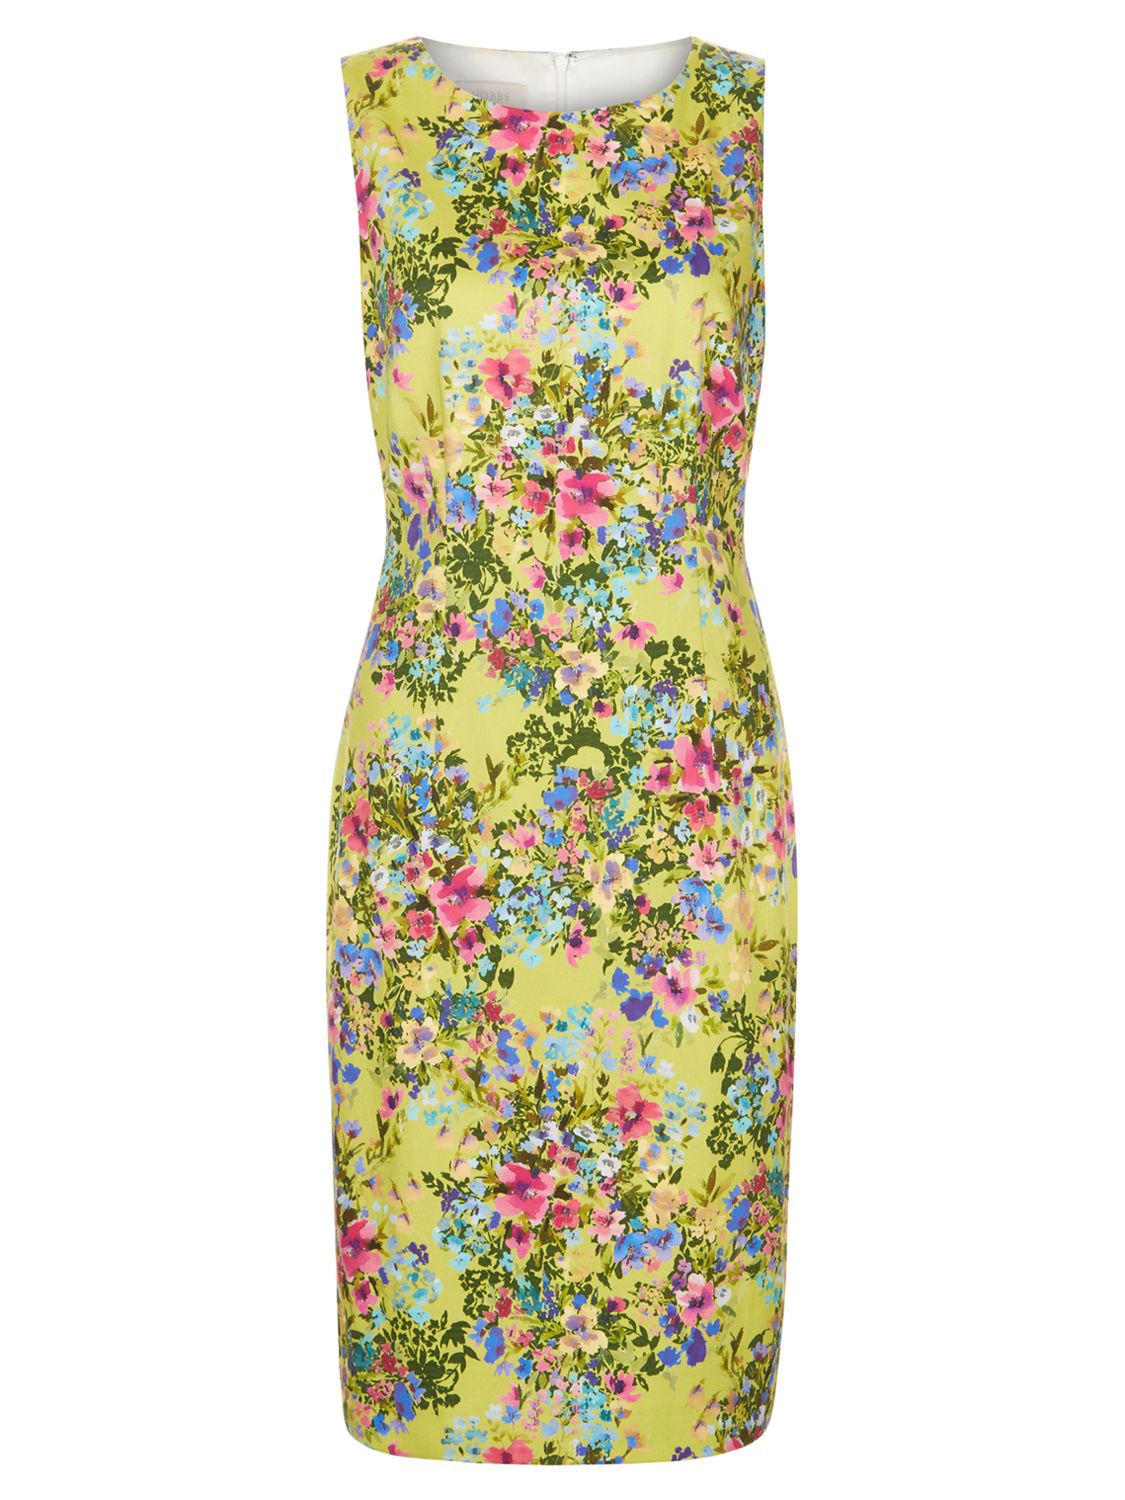 Hobbs Fiona Floral Print Dress, Lemondrop Mul